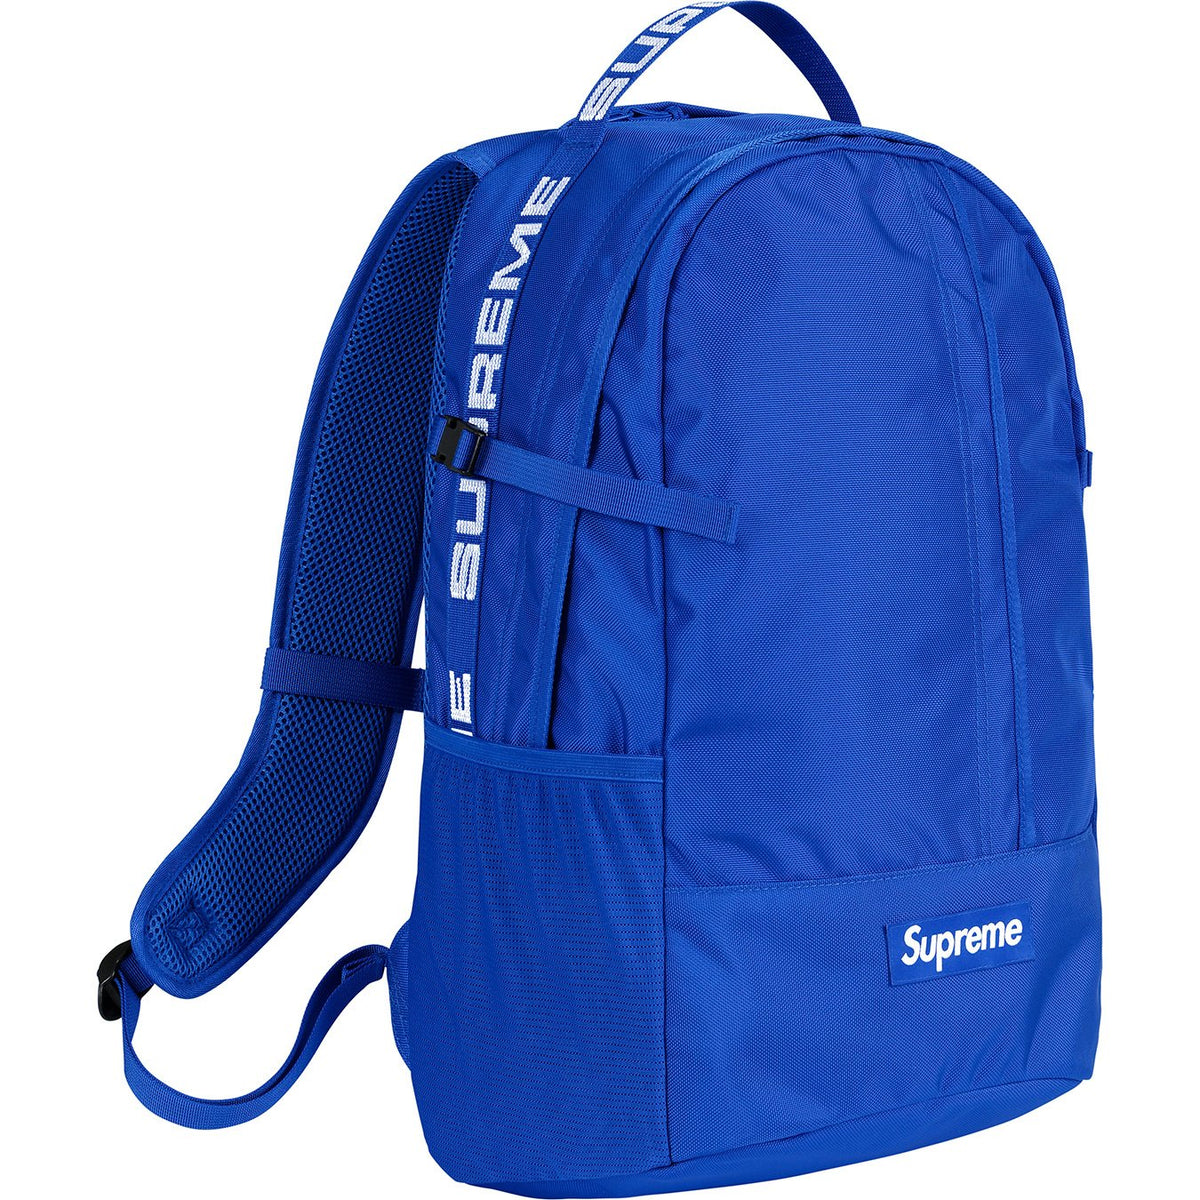 Bape Supreme Backpacks for Sale